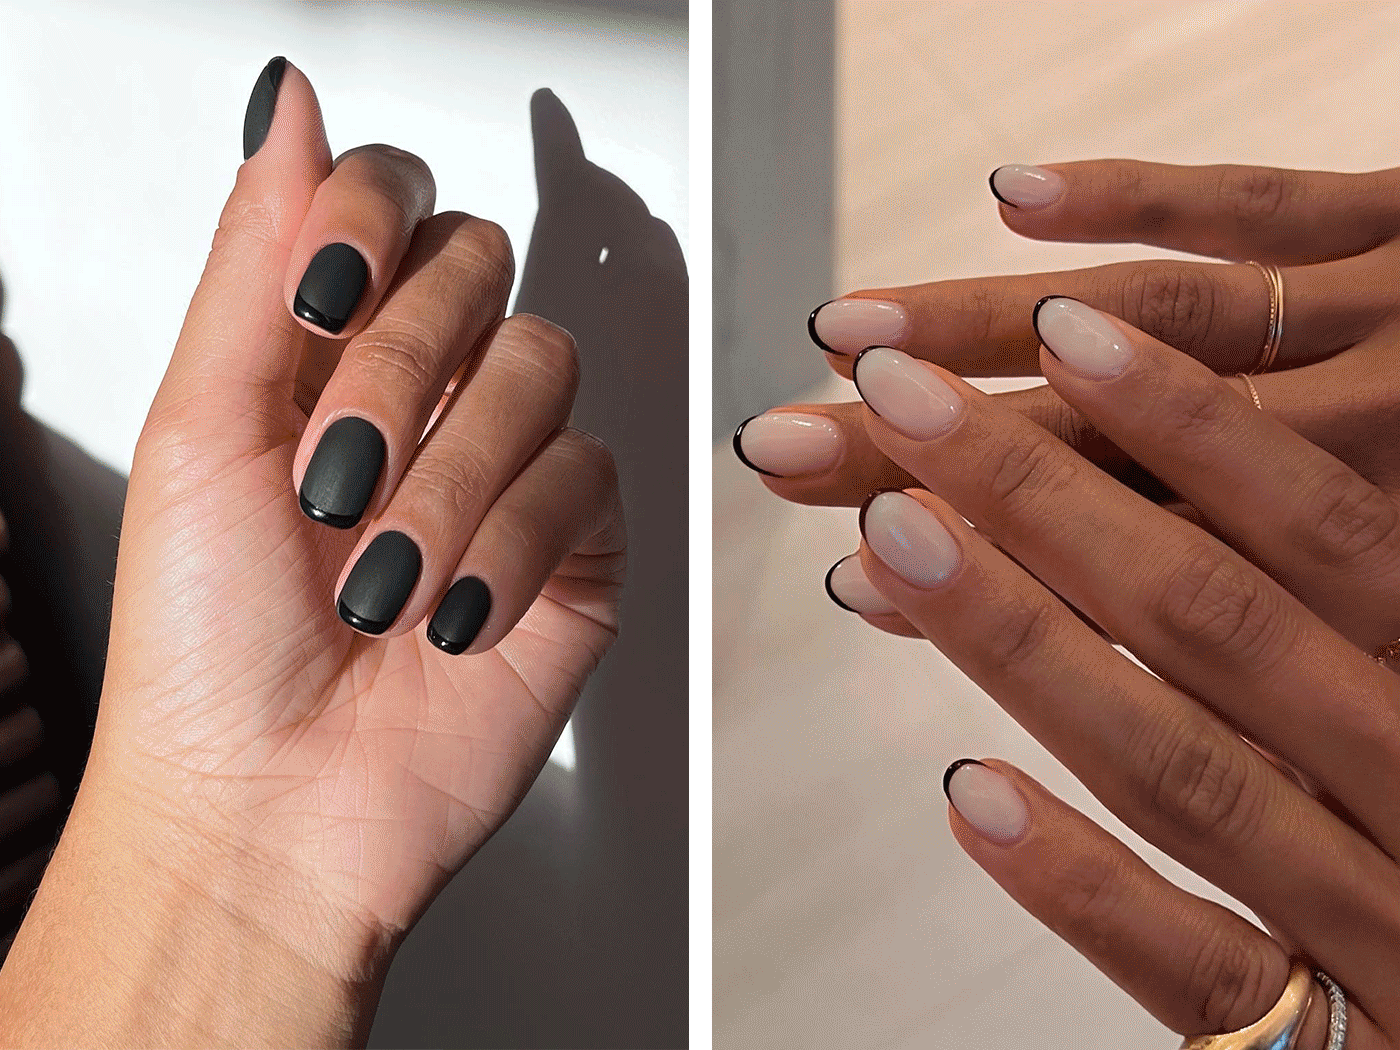 Dark Tips: Το πιο chic look για εσένα που αγαπάς το french manicure